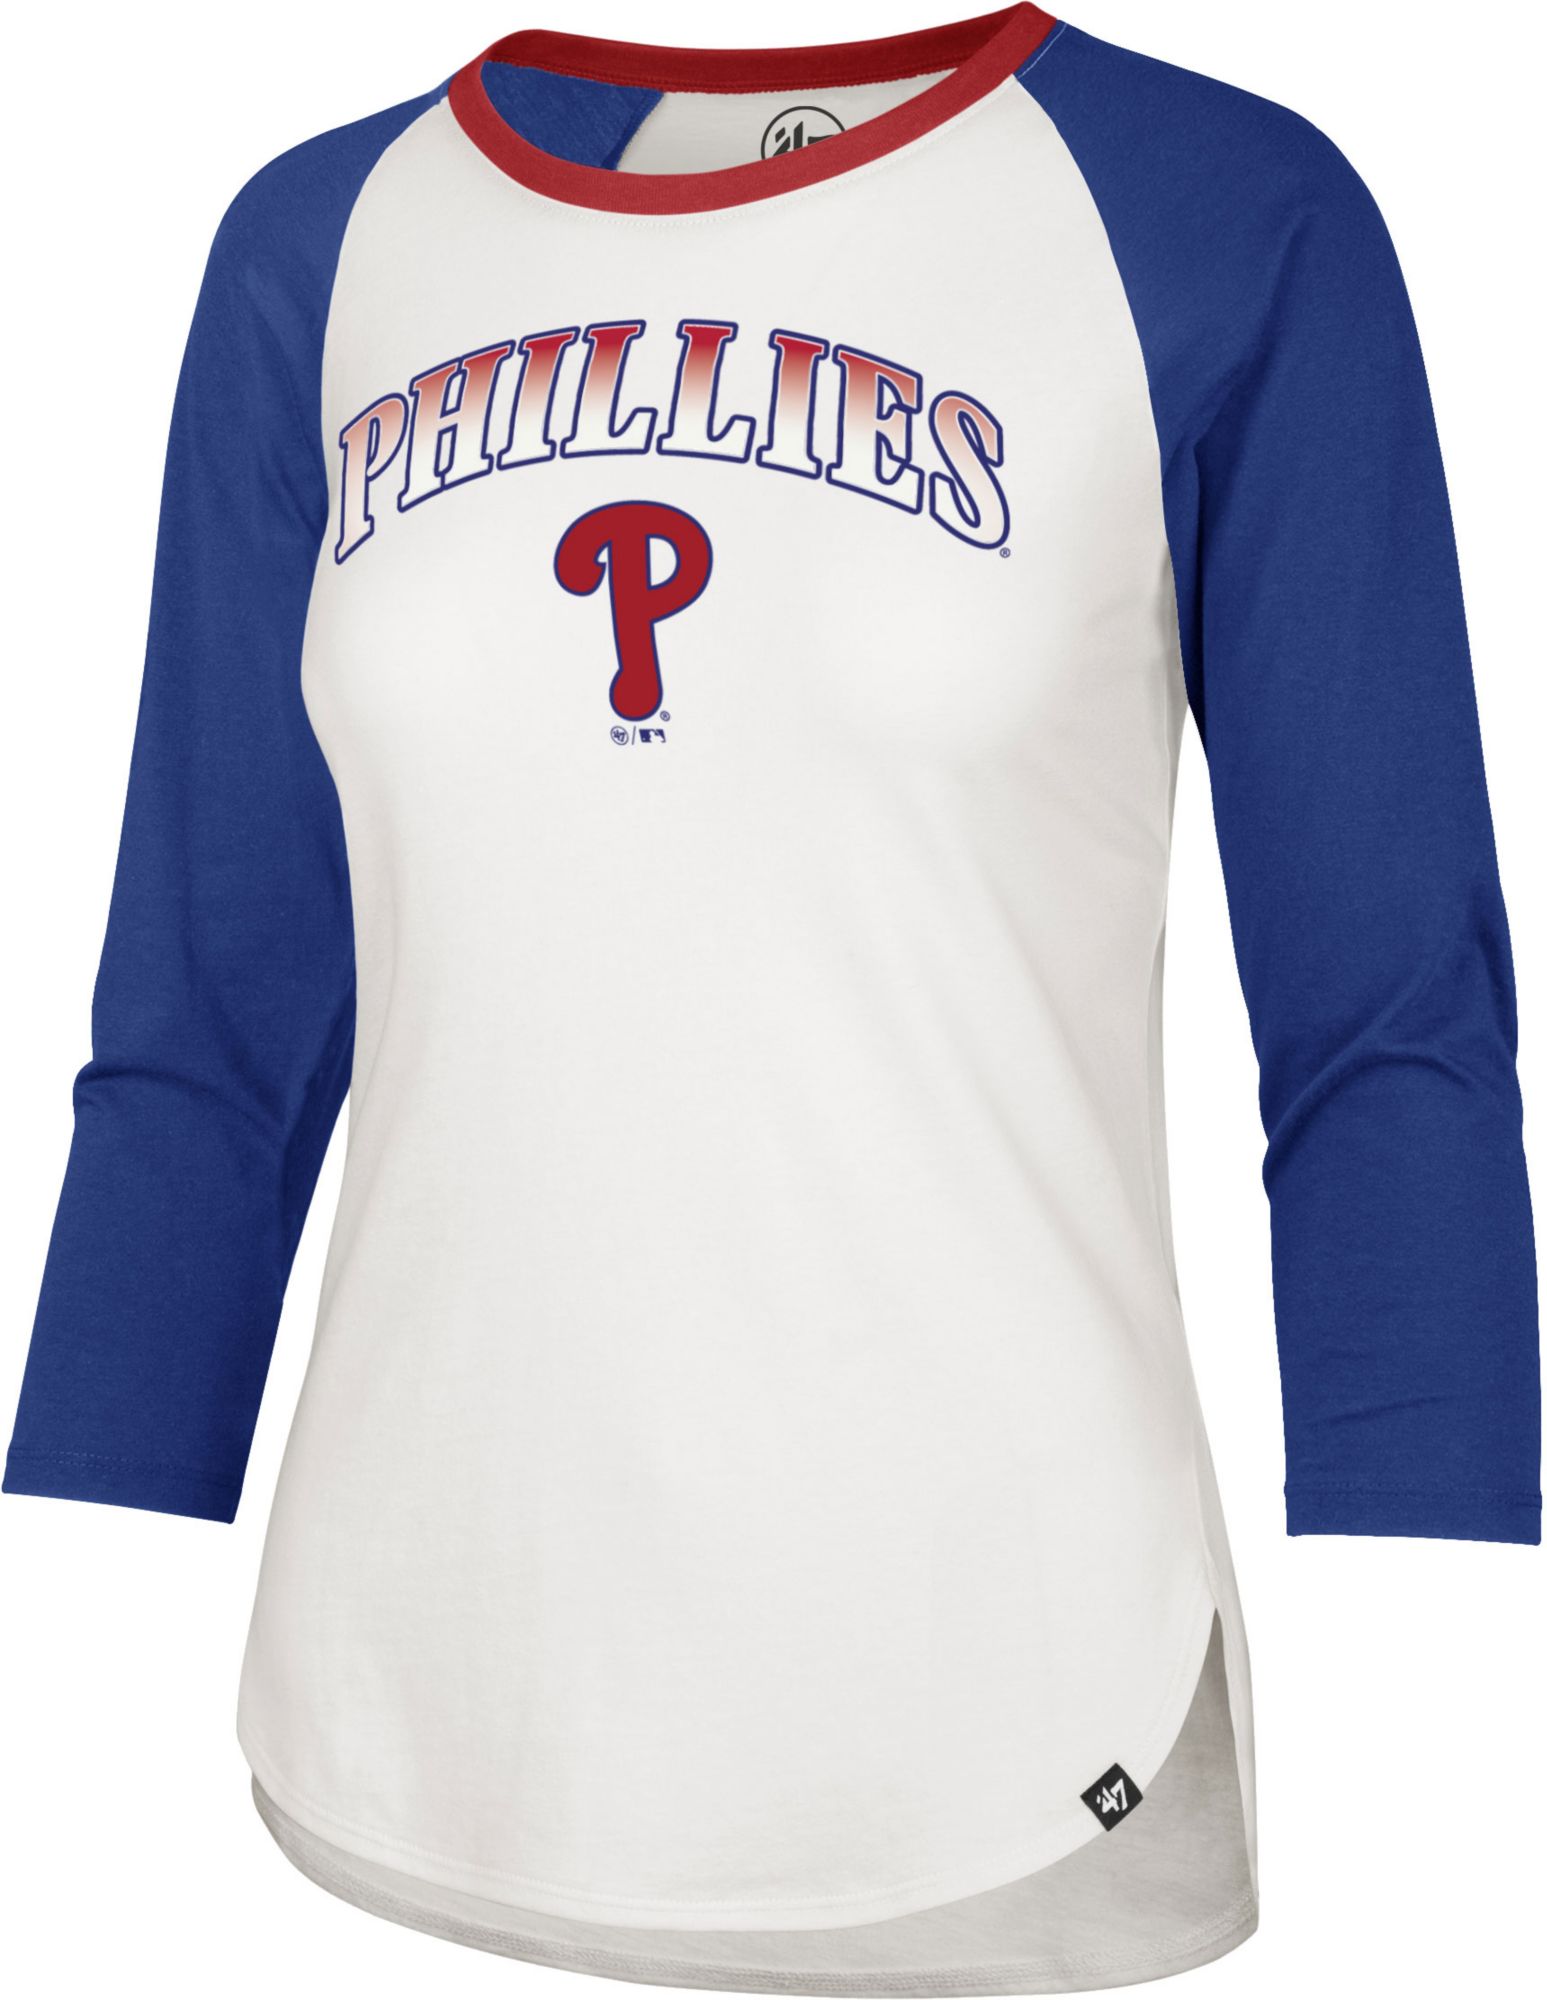 phillies women's jersey